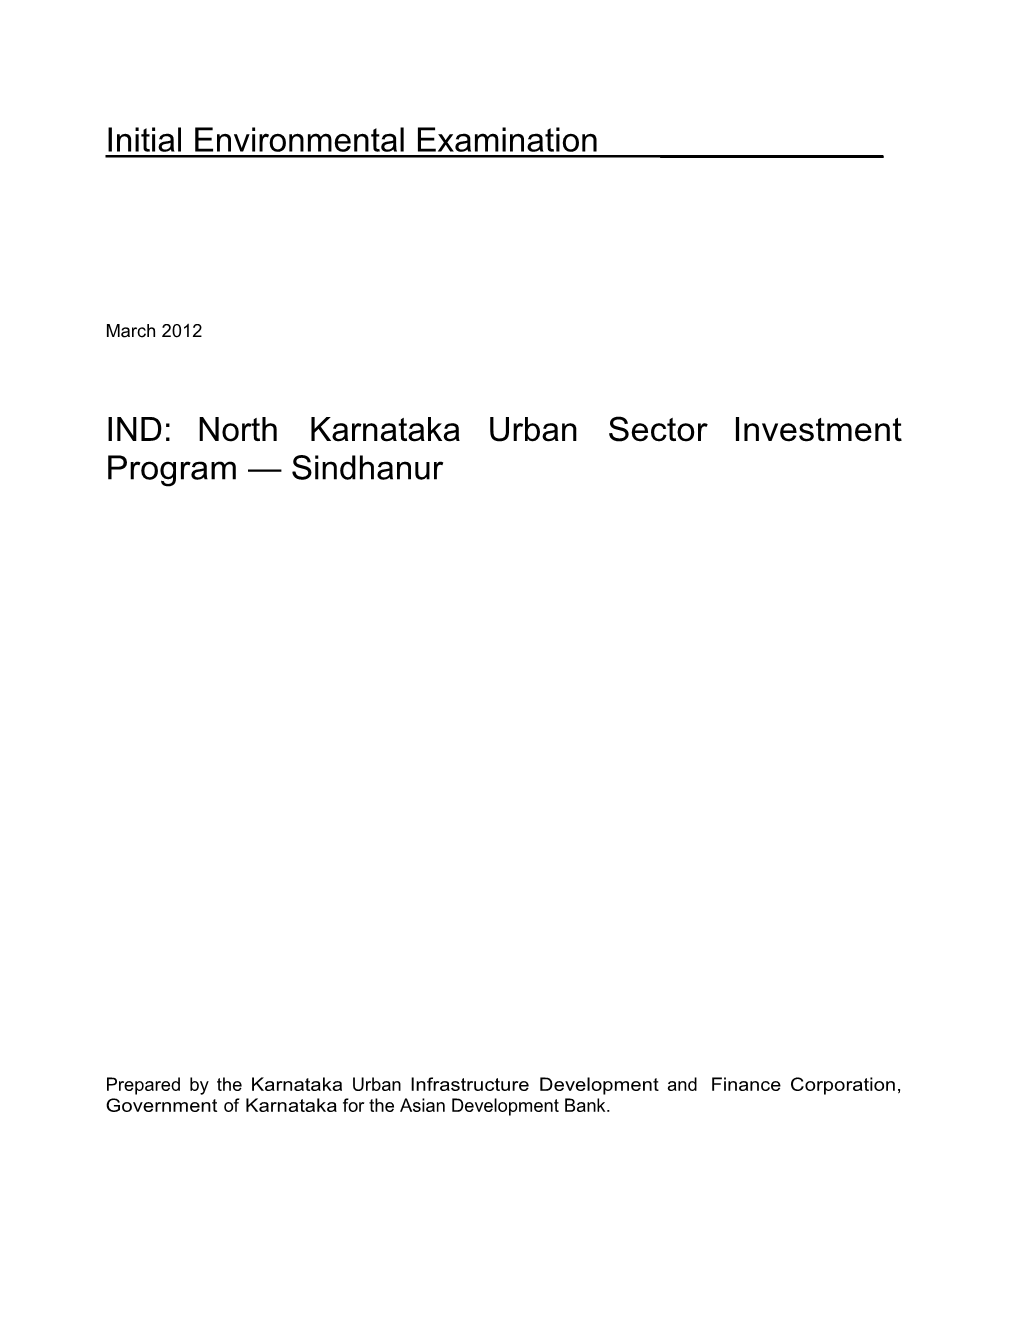 IEE: India: North Karnataka Urban Sector Investment Program